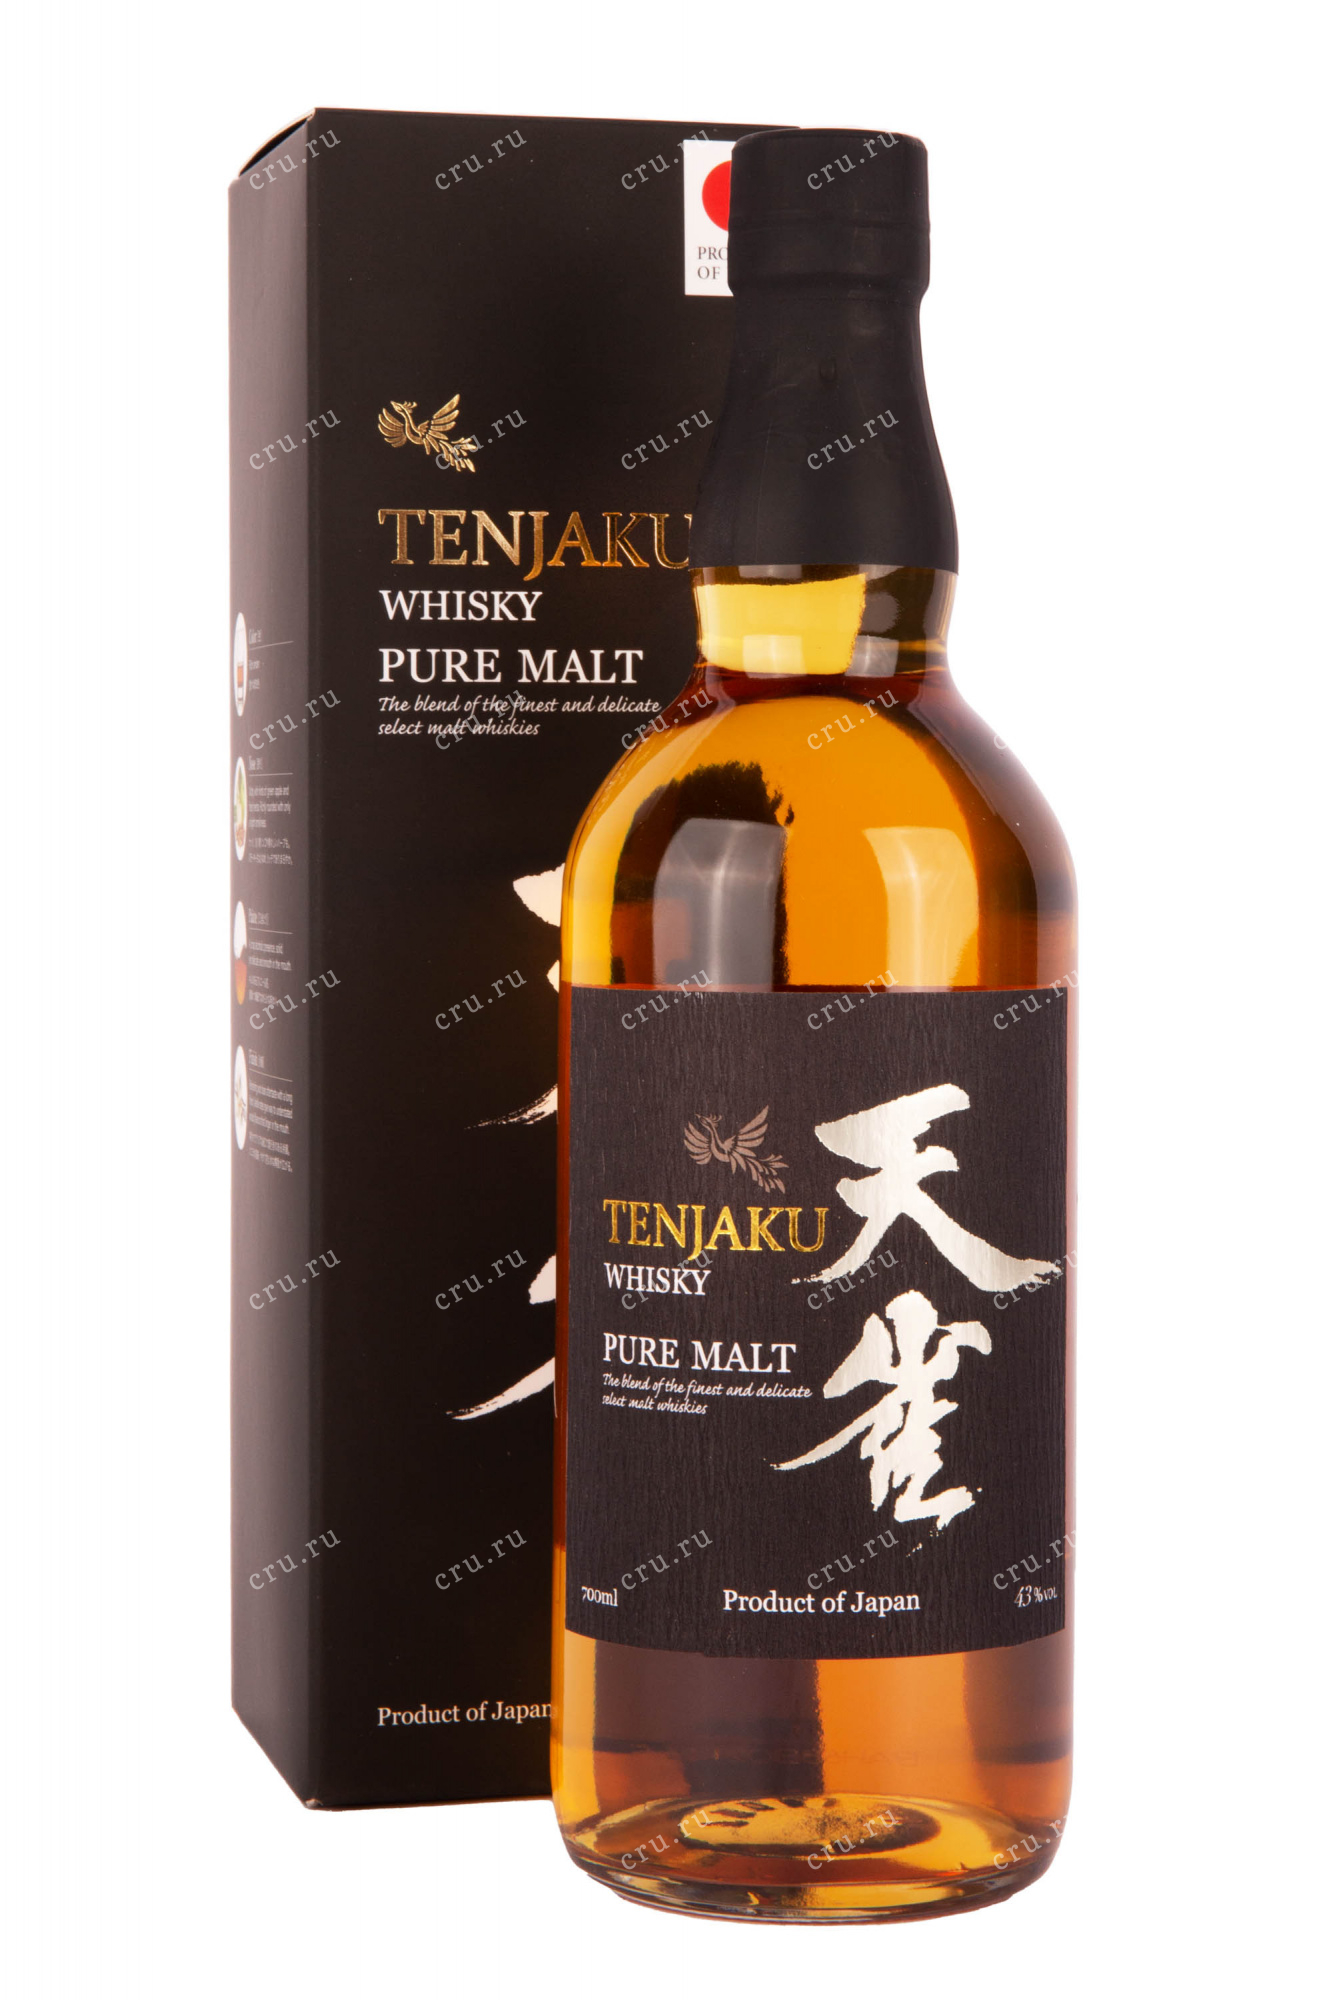 Tenjaku Pure Malt. Виски Tenjaku Япония 0,7 л. Тенжаку виски. Пюре Молт виски Япония. Tenjaku 0.7